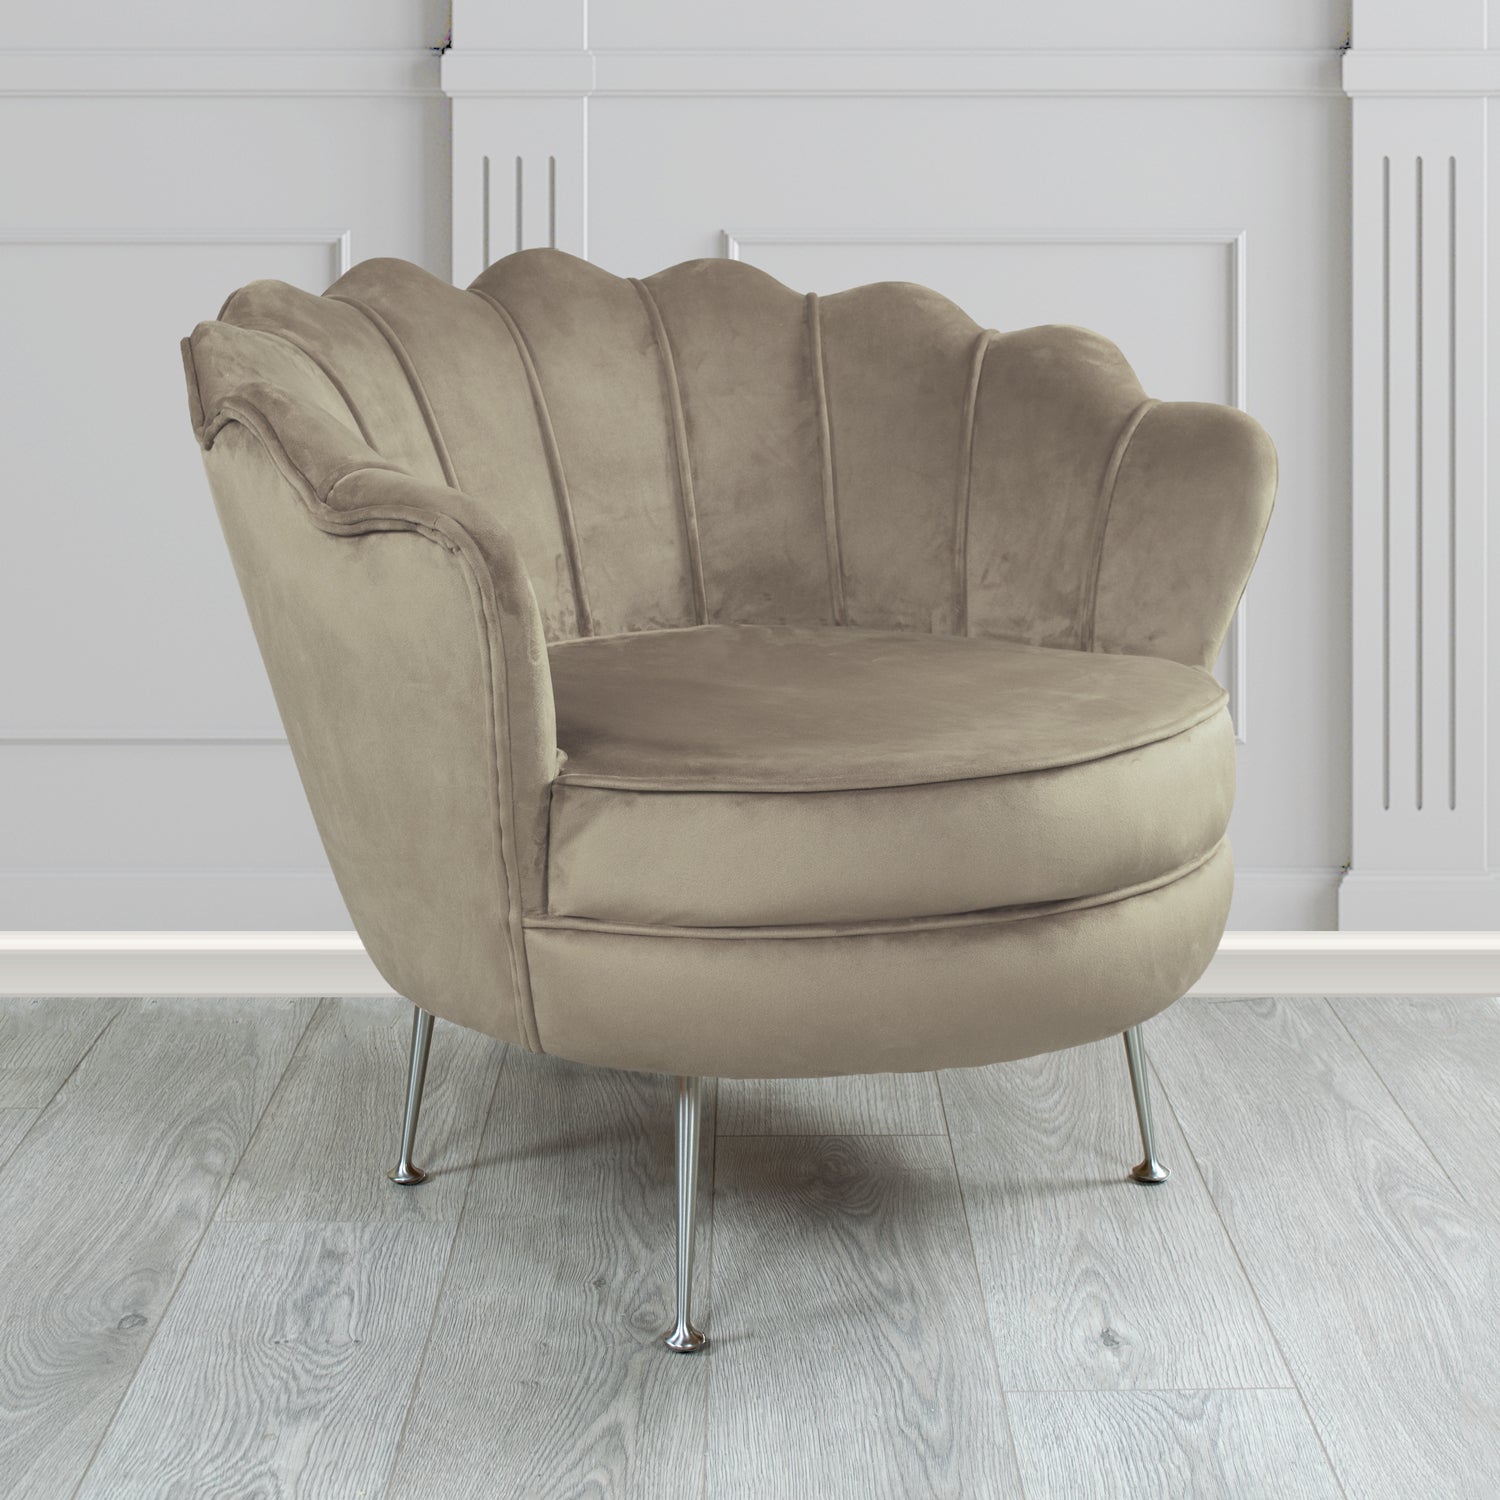 Olivia Monaco Cedar Plain Velvet Fabric Shell Chair - The Tub Chair Shop